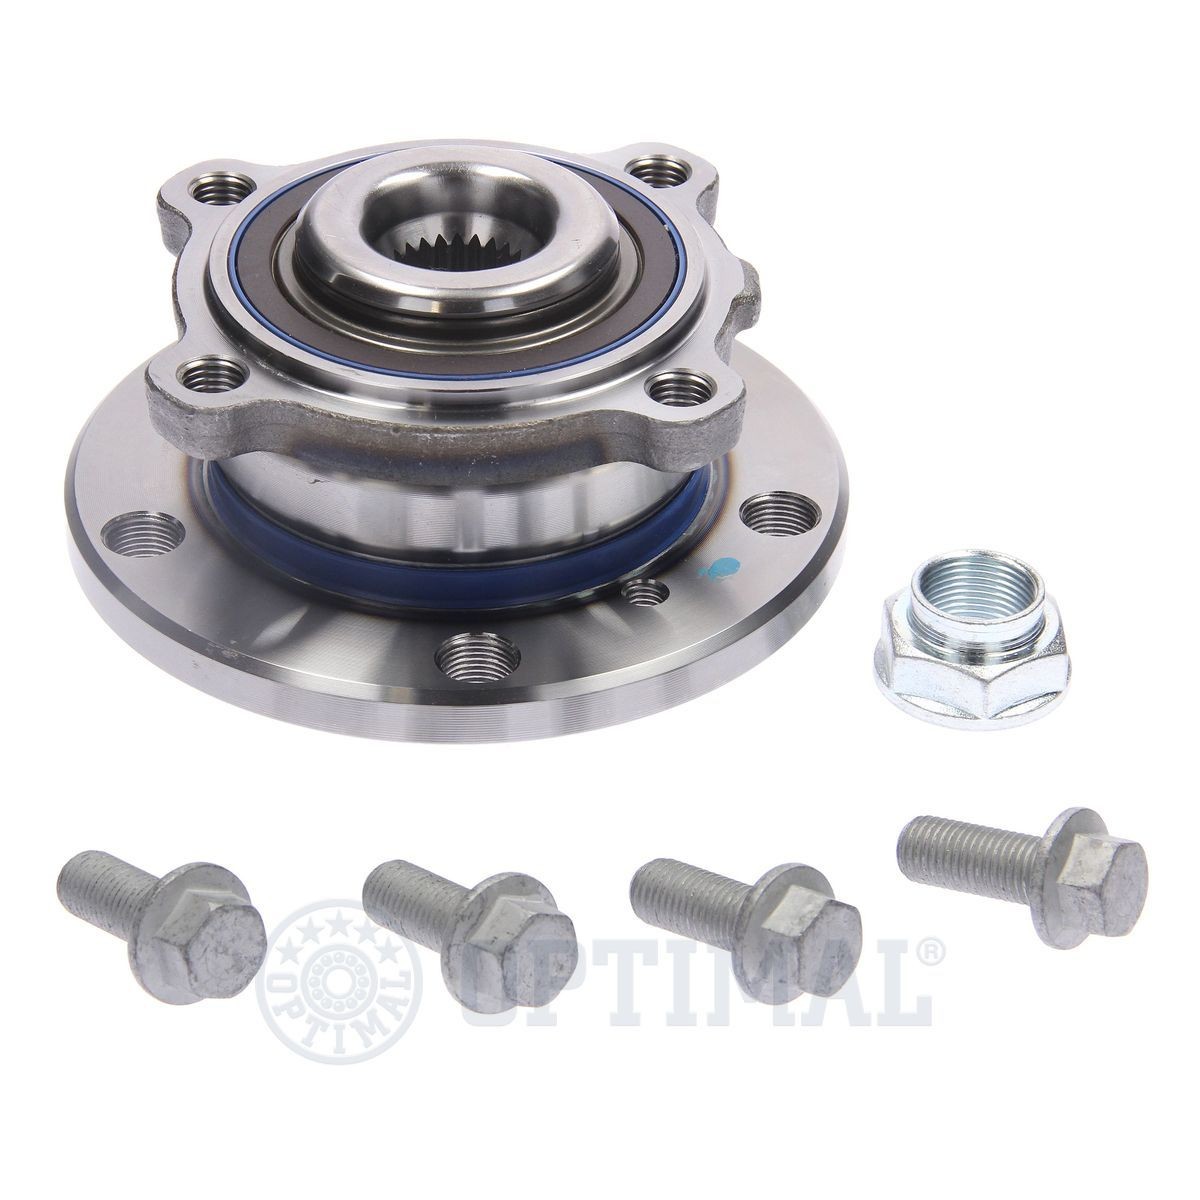 OPTIMAL 501773 Wheel bearing kit with integrated magnetic sensor ring, 142,9, 88 mm